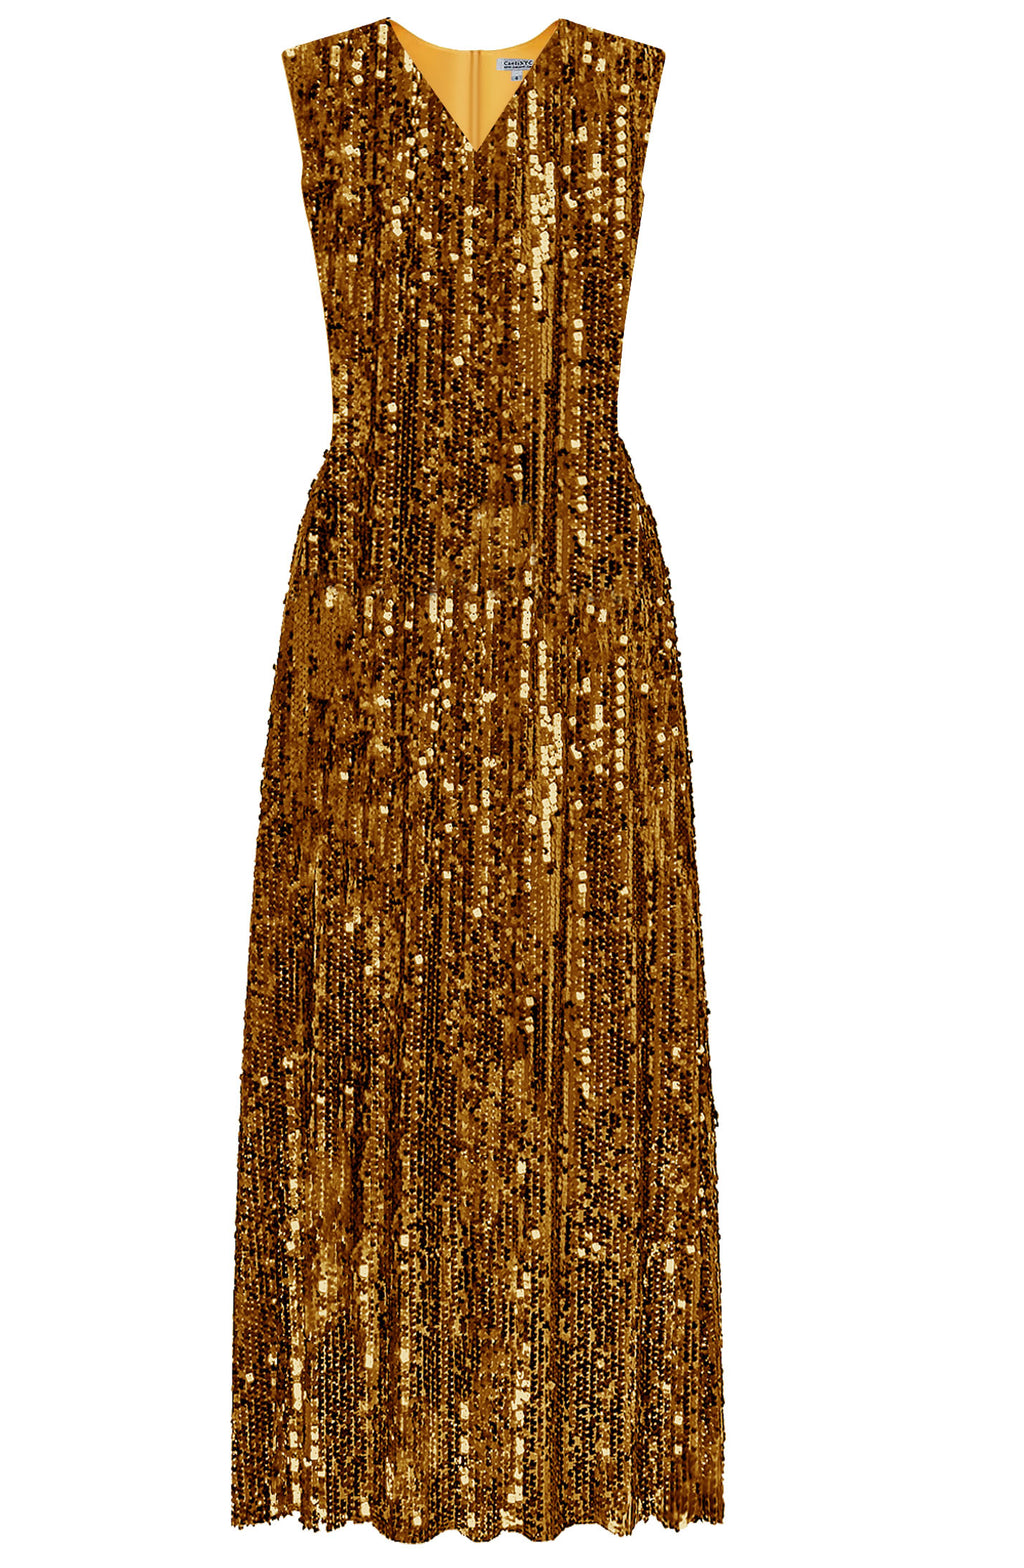 Vangelis Gold Sequin Dress, Vneck party dress, midi dress, gold dress